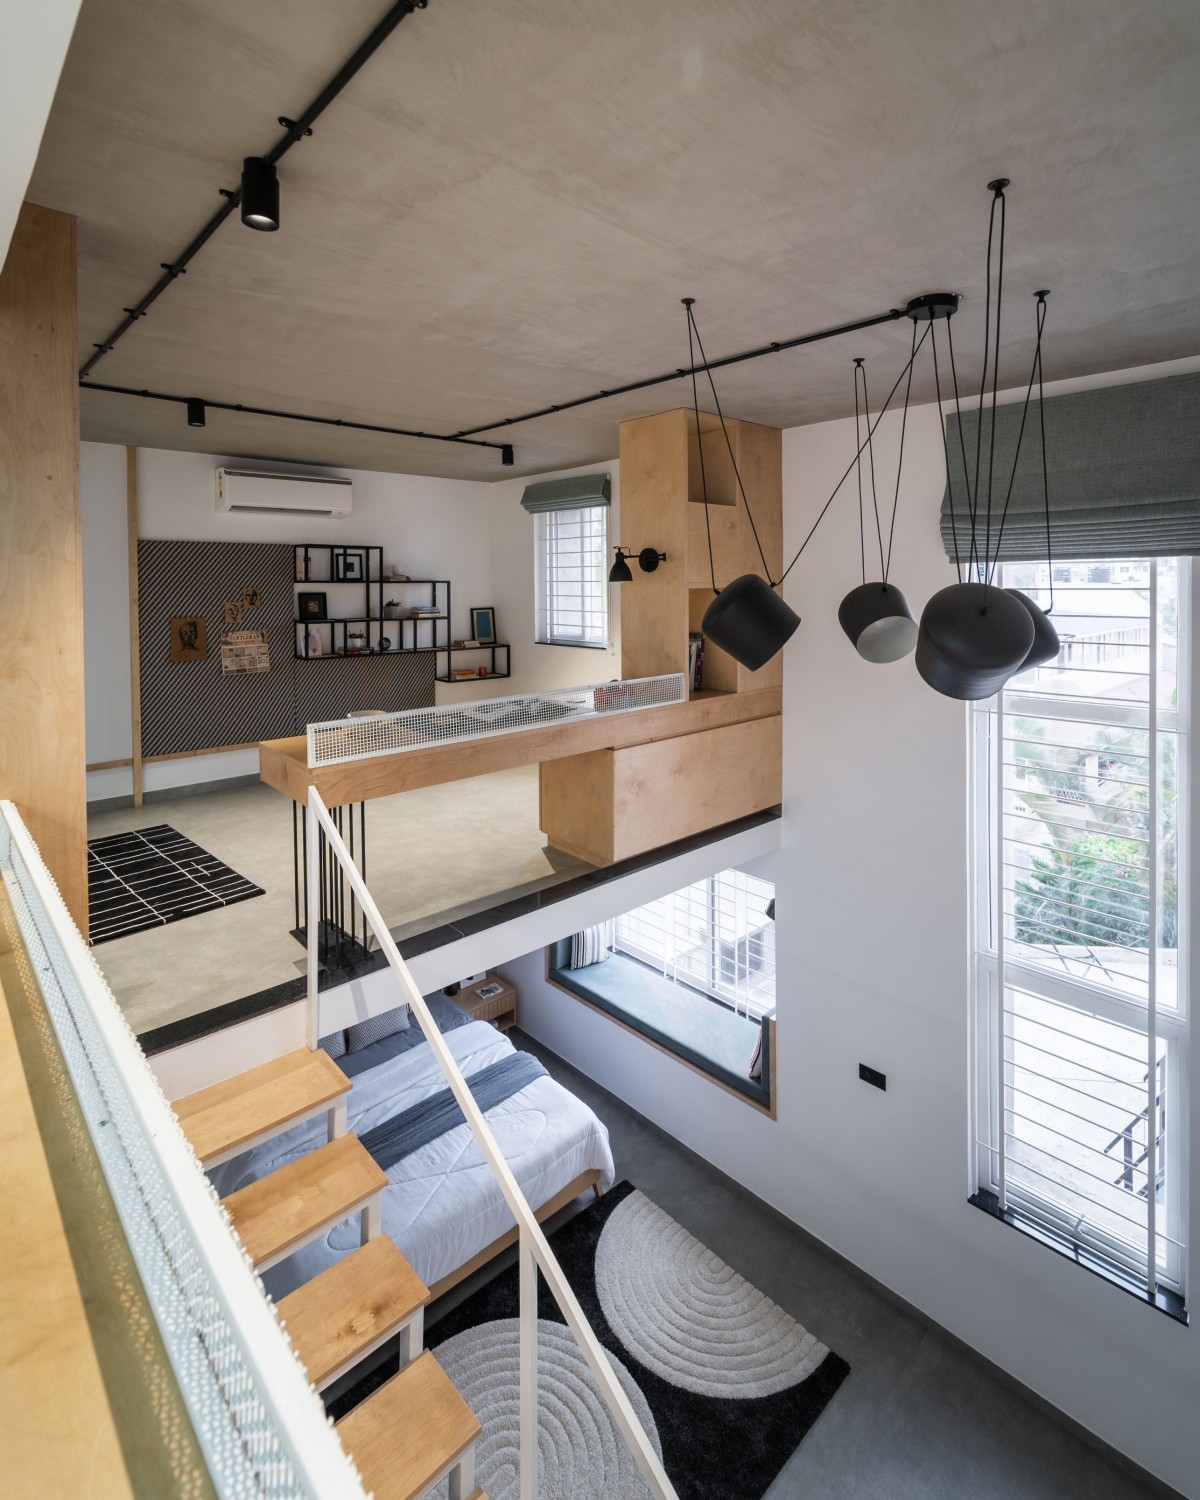 Mezzanine view from studio of The Artist’s Loft by Jalihal Associates